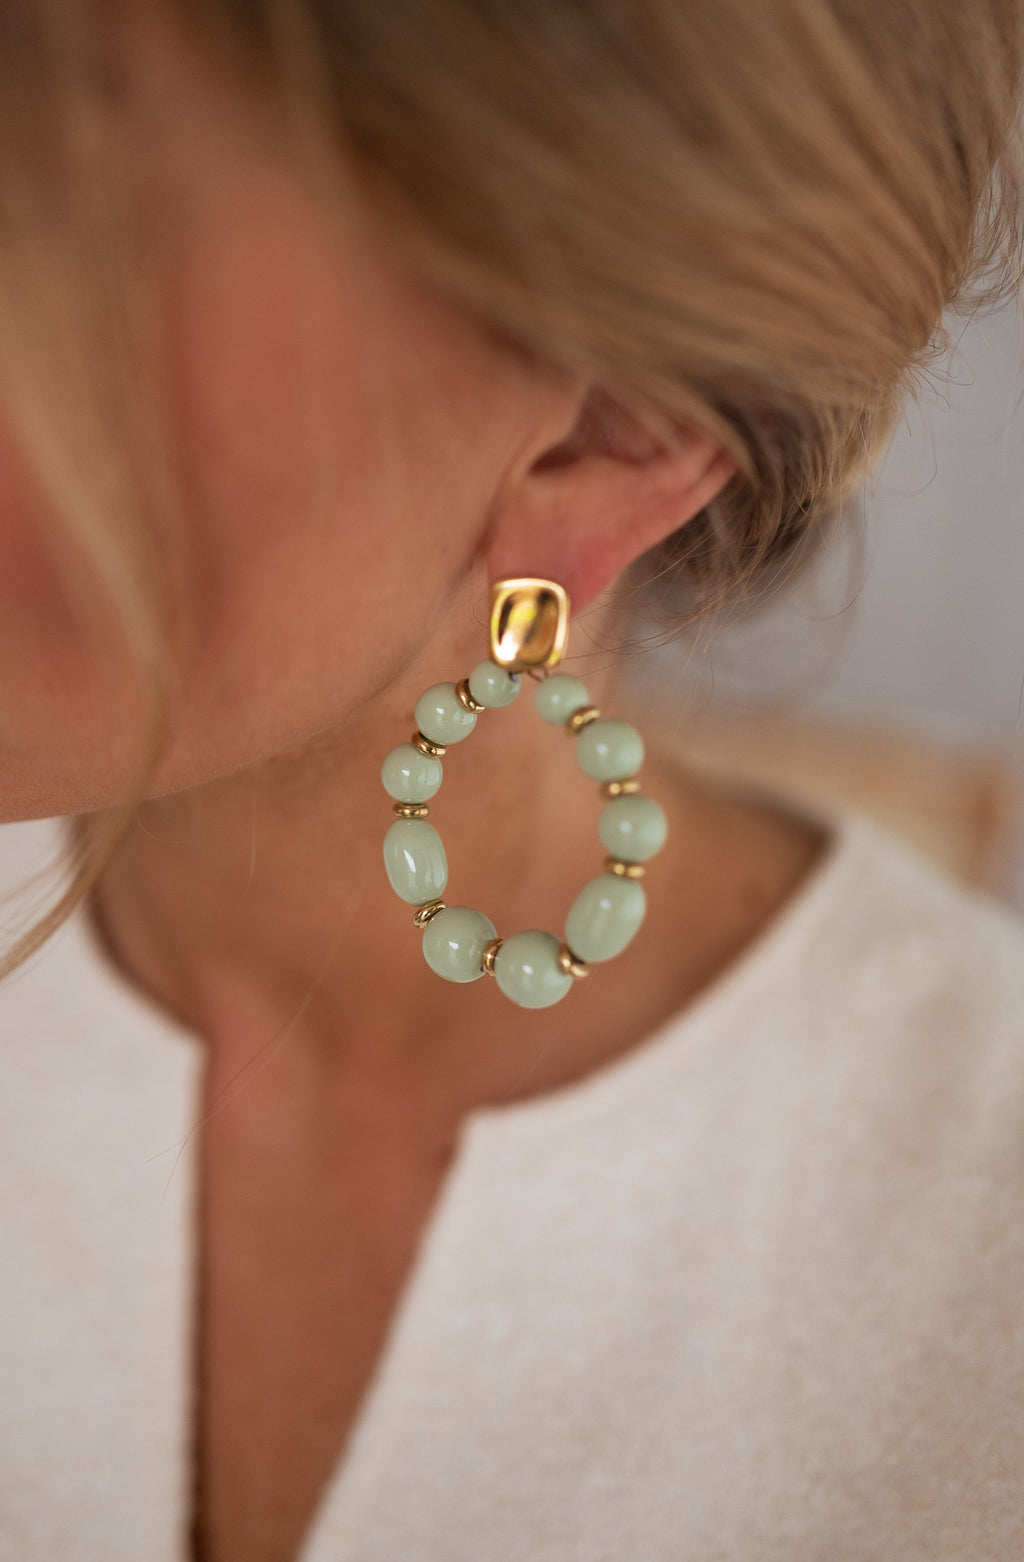 Loda earrings - Golden and green